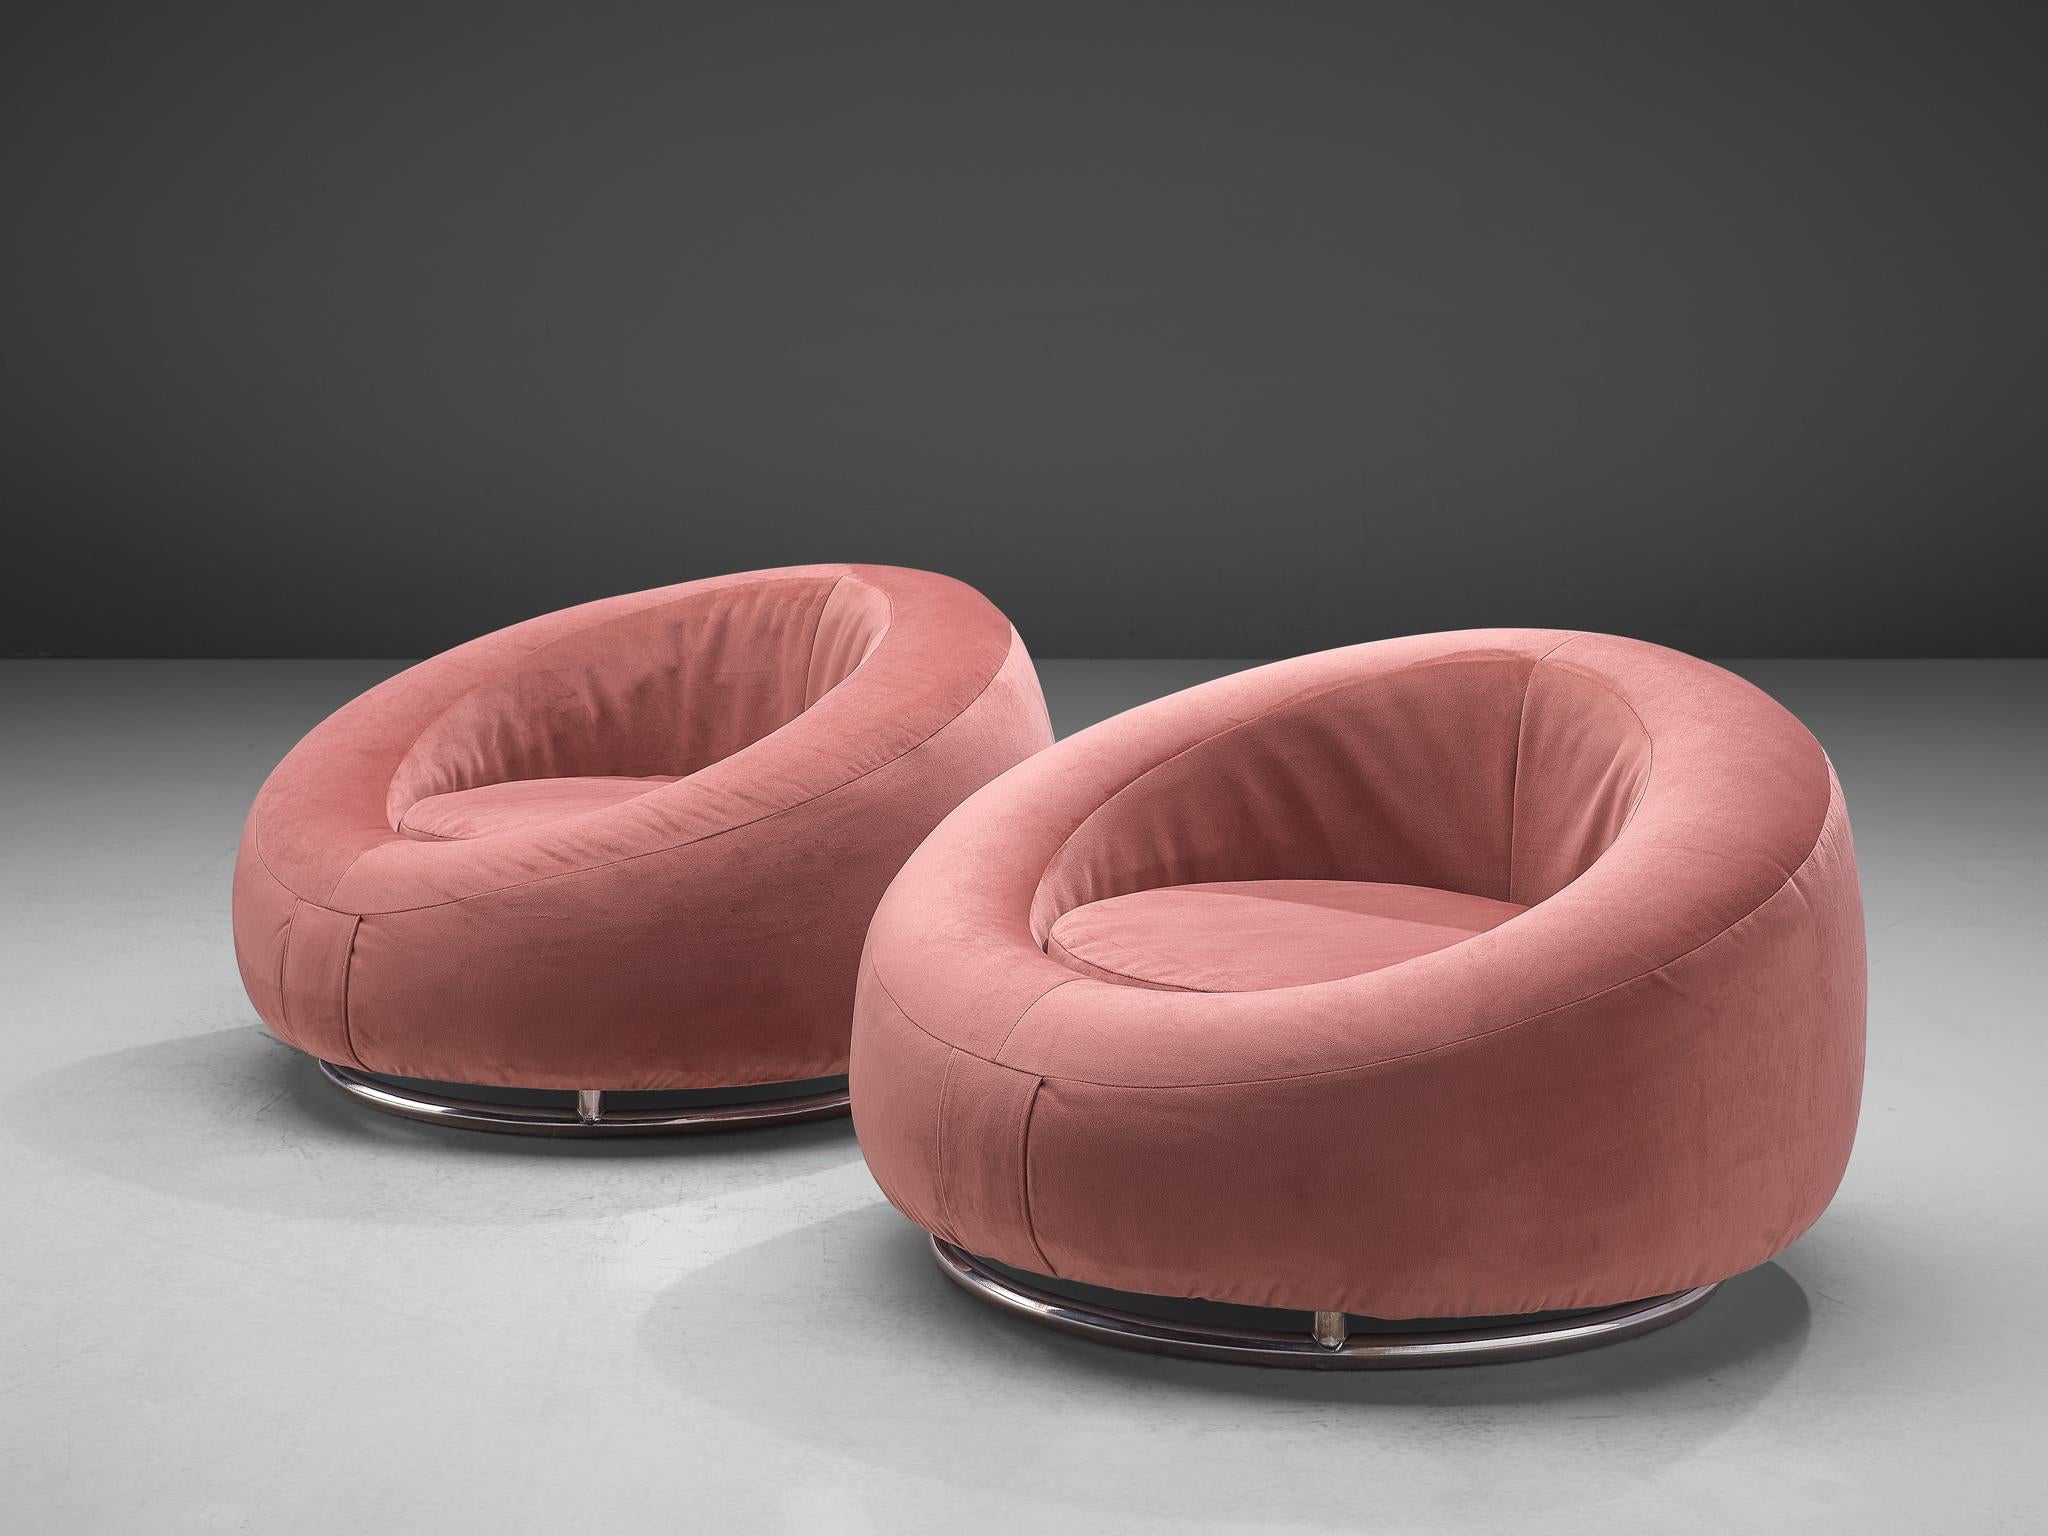 circular chairs